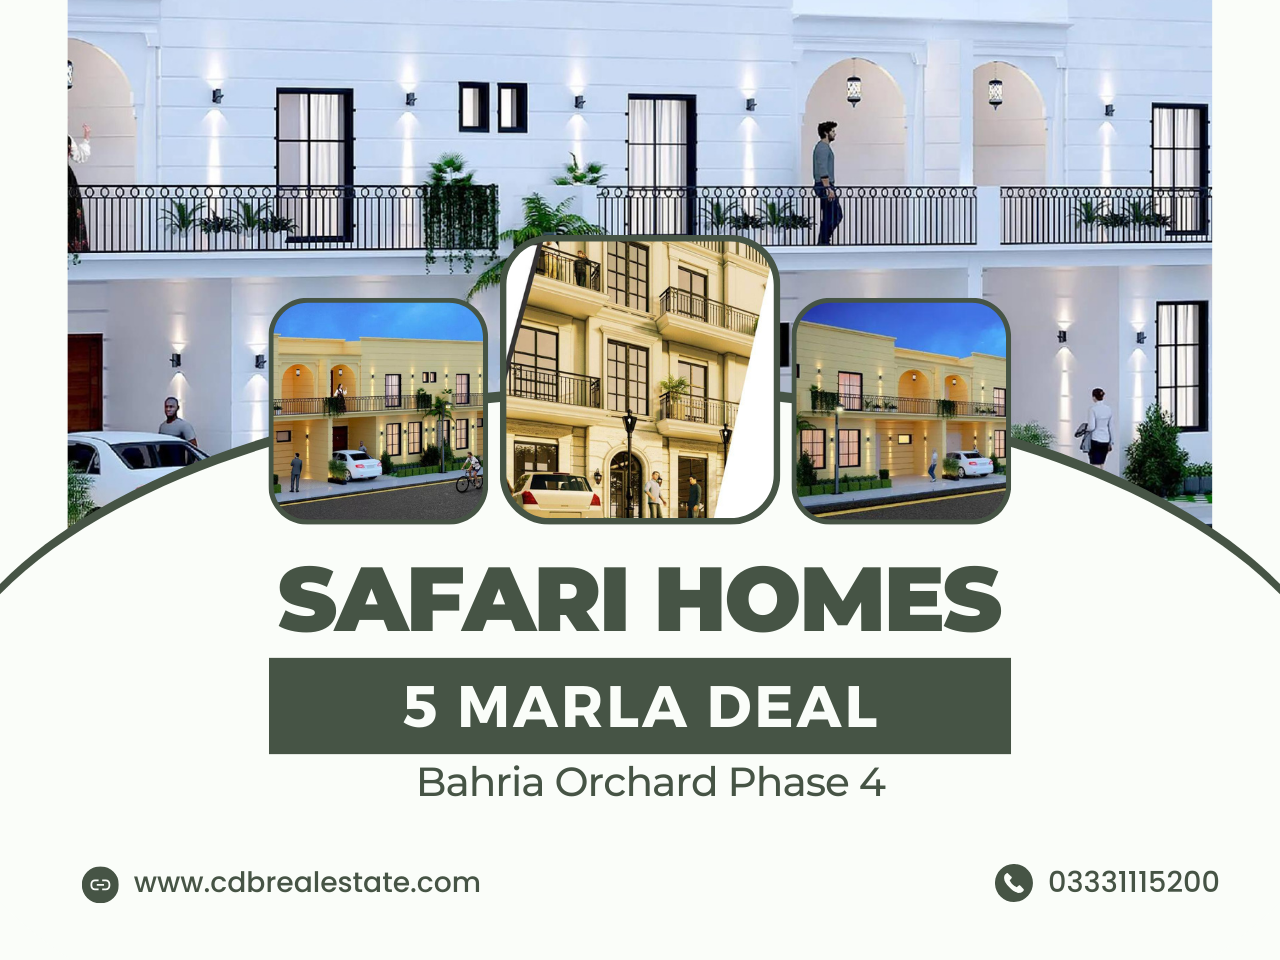 Safari Homes 5 Marla Deal